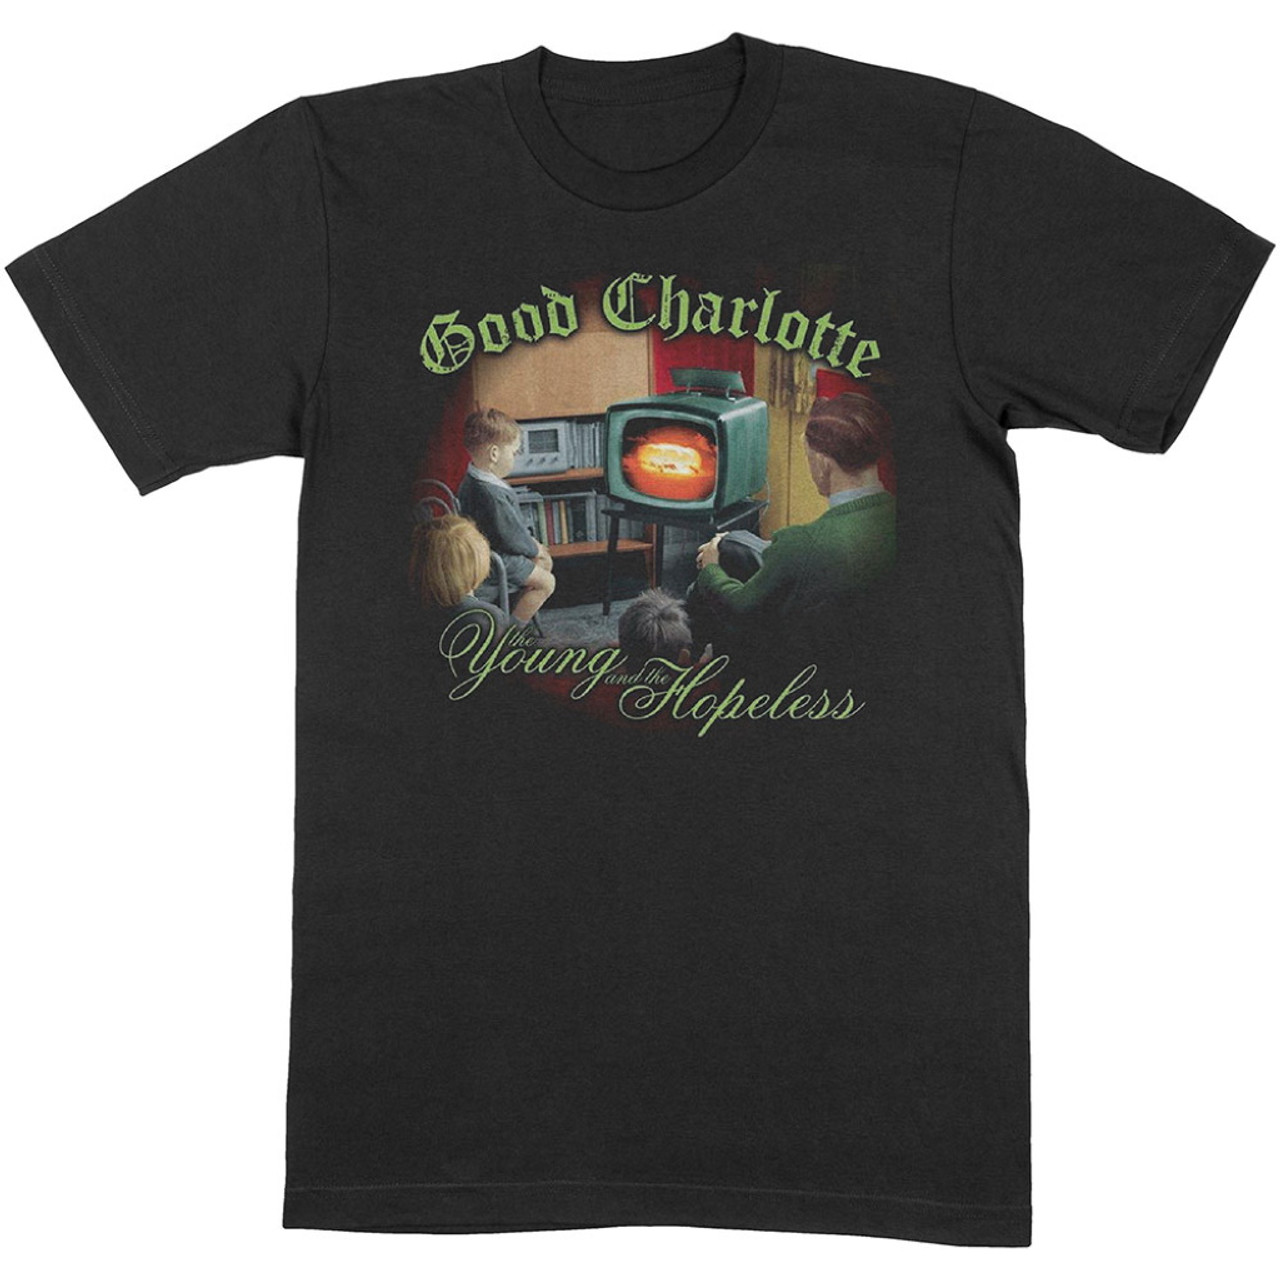 Good Charlotte 'Young & Hopeless' (Black) T-Shirt